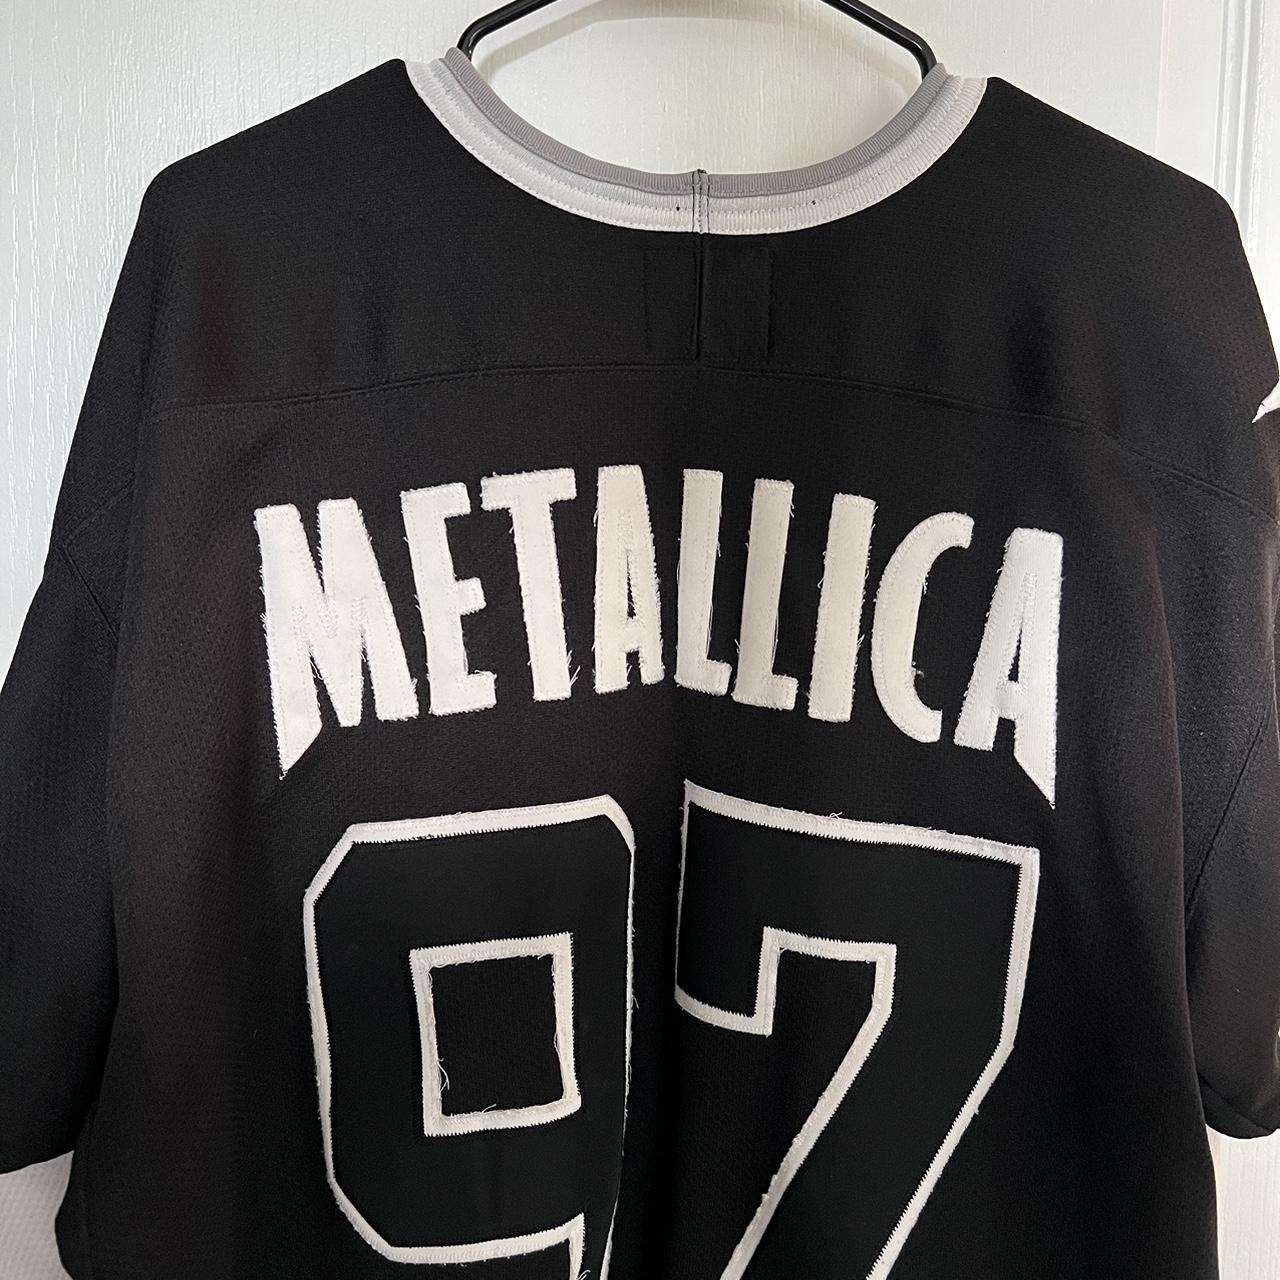 90s metallica flaming skull pushead hockey jersey size large